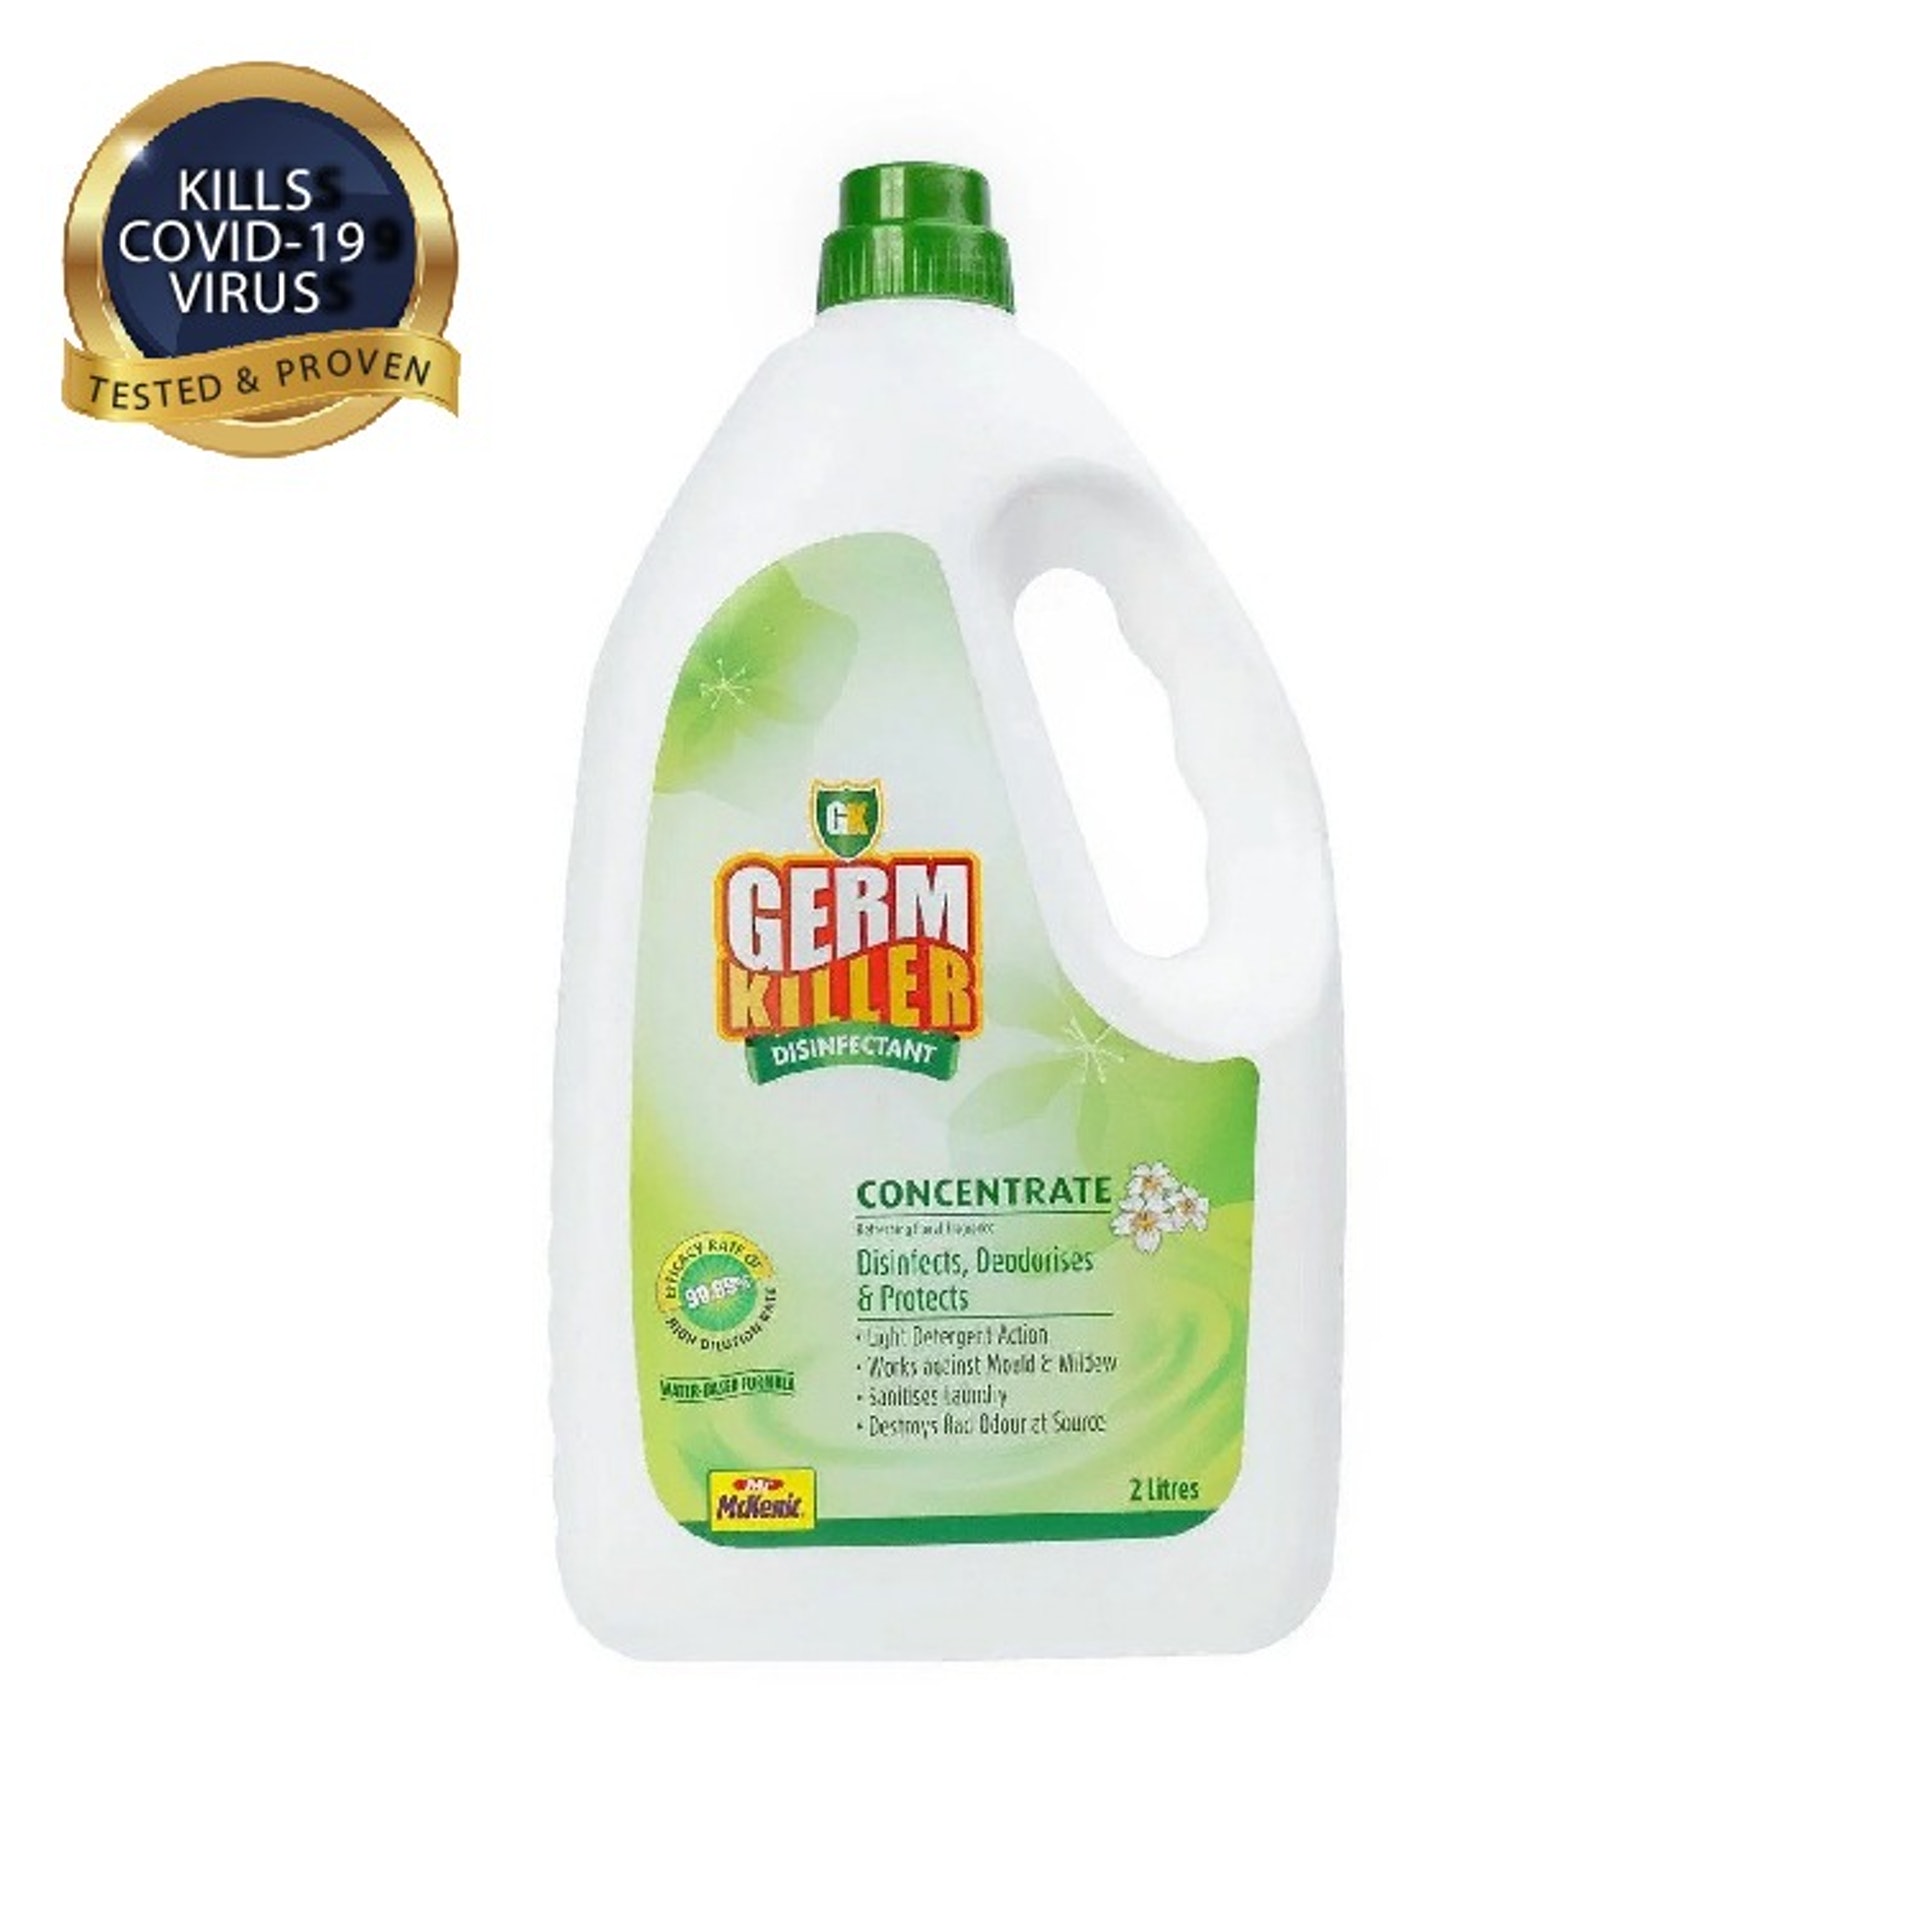 GK淨可立® 殺菌清潔濃縮液™的多功能配方能夠清潔及消毒所有表面，有效清除污垢及保持表面清潔衛生。